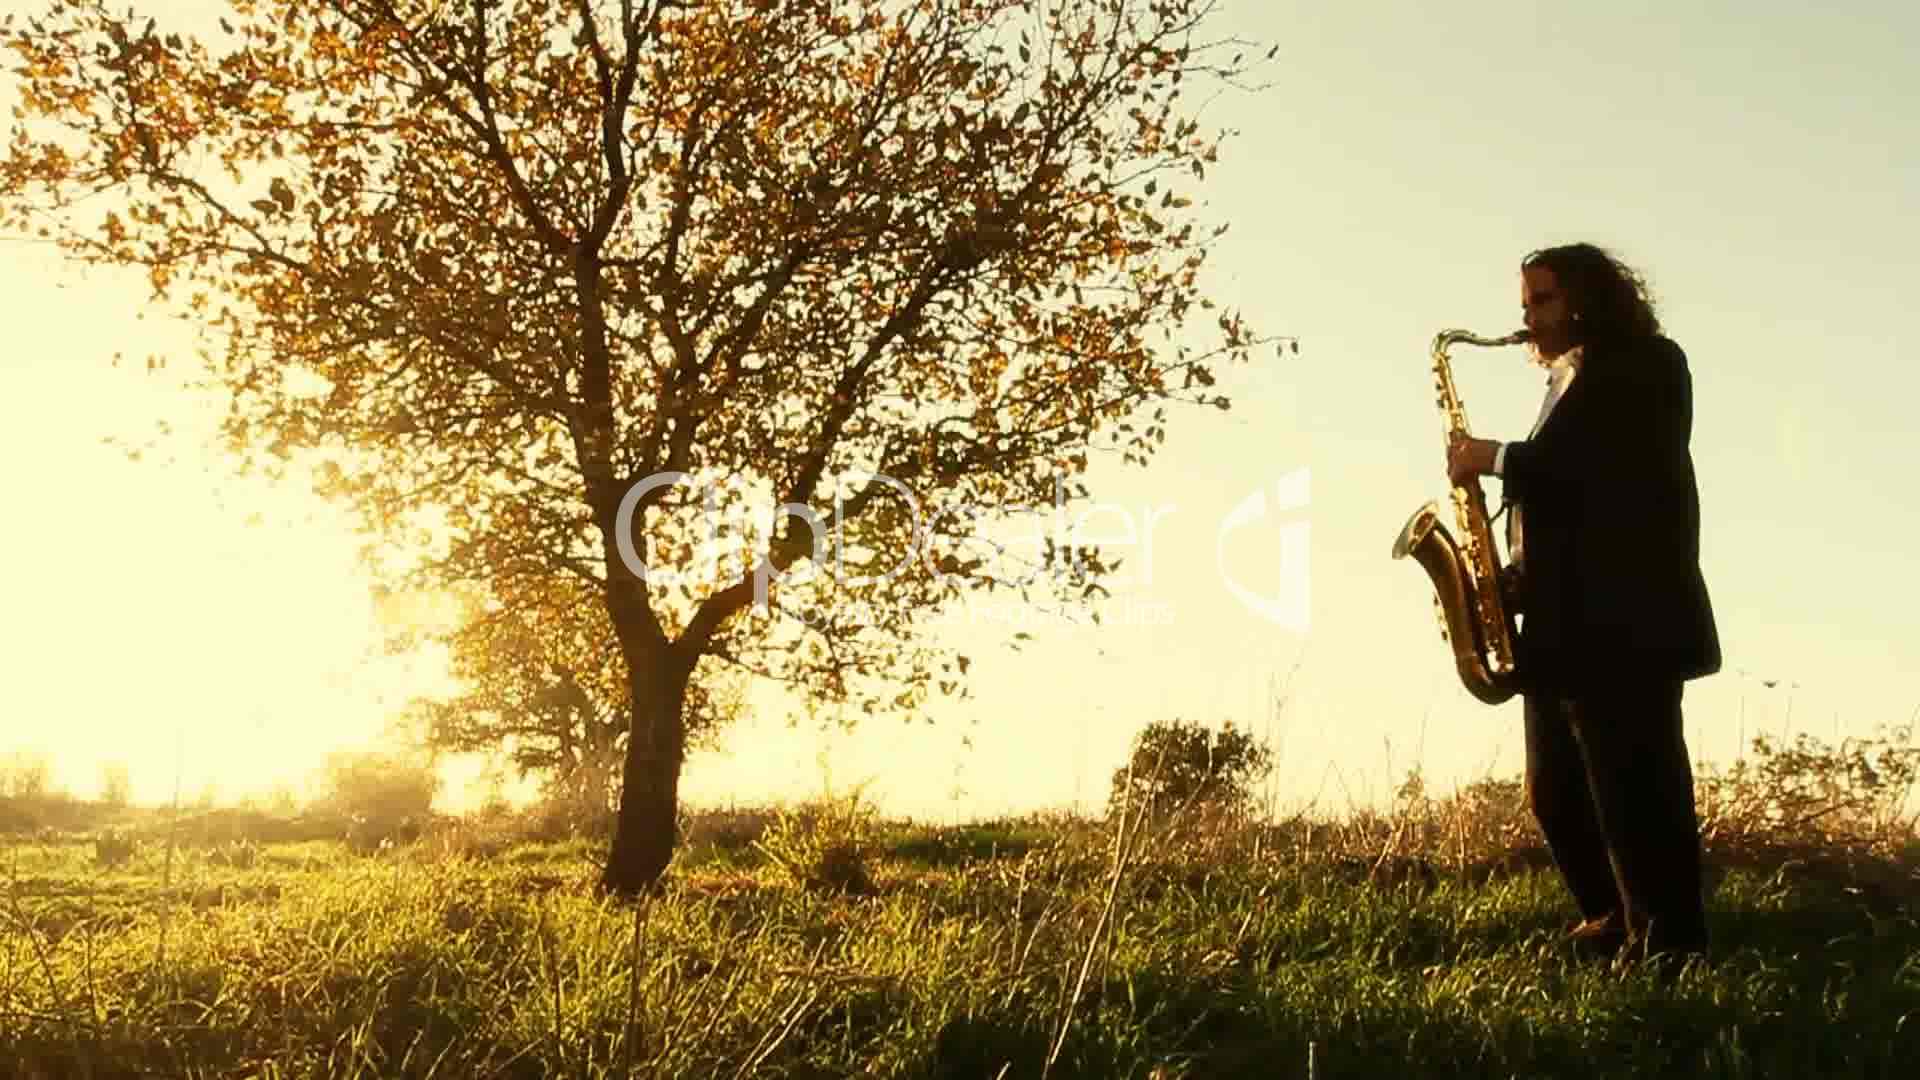 Jazz Saxophone Wallpaper Desktop Background qz4nu 1920x1080 px